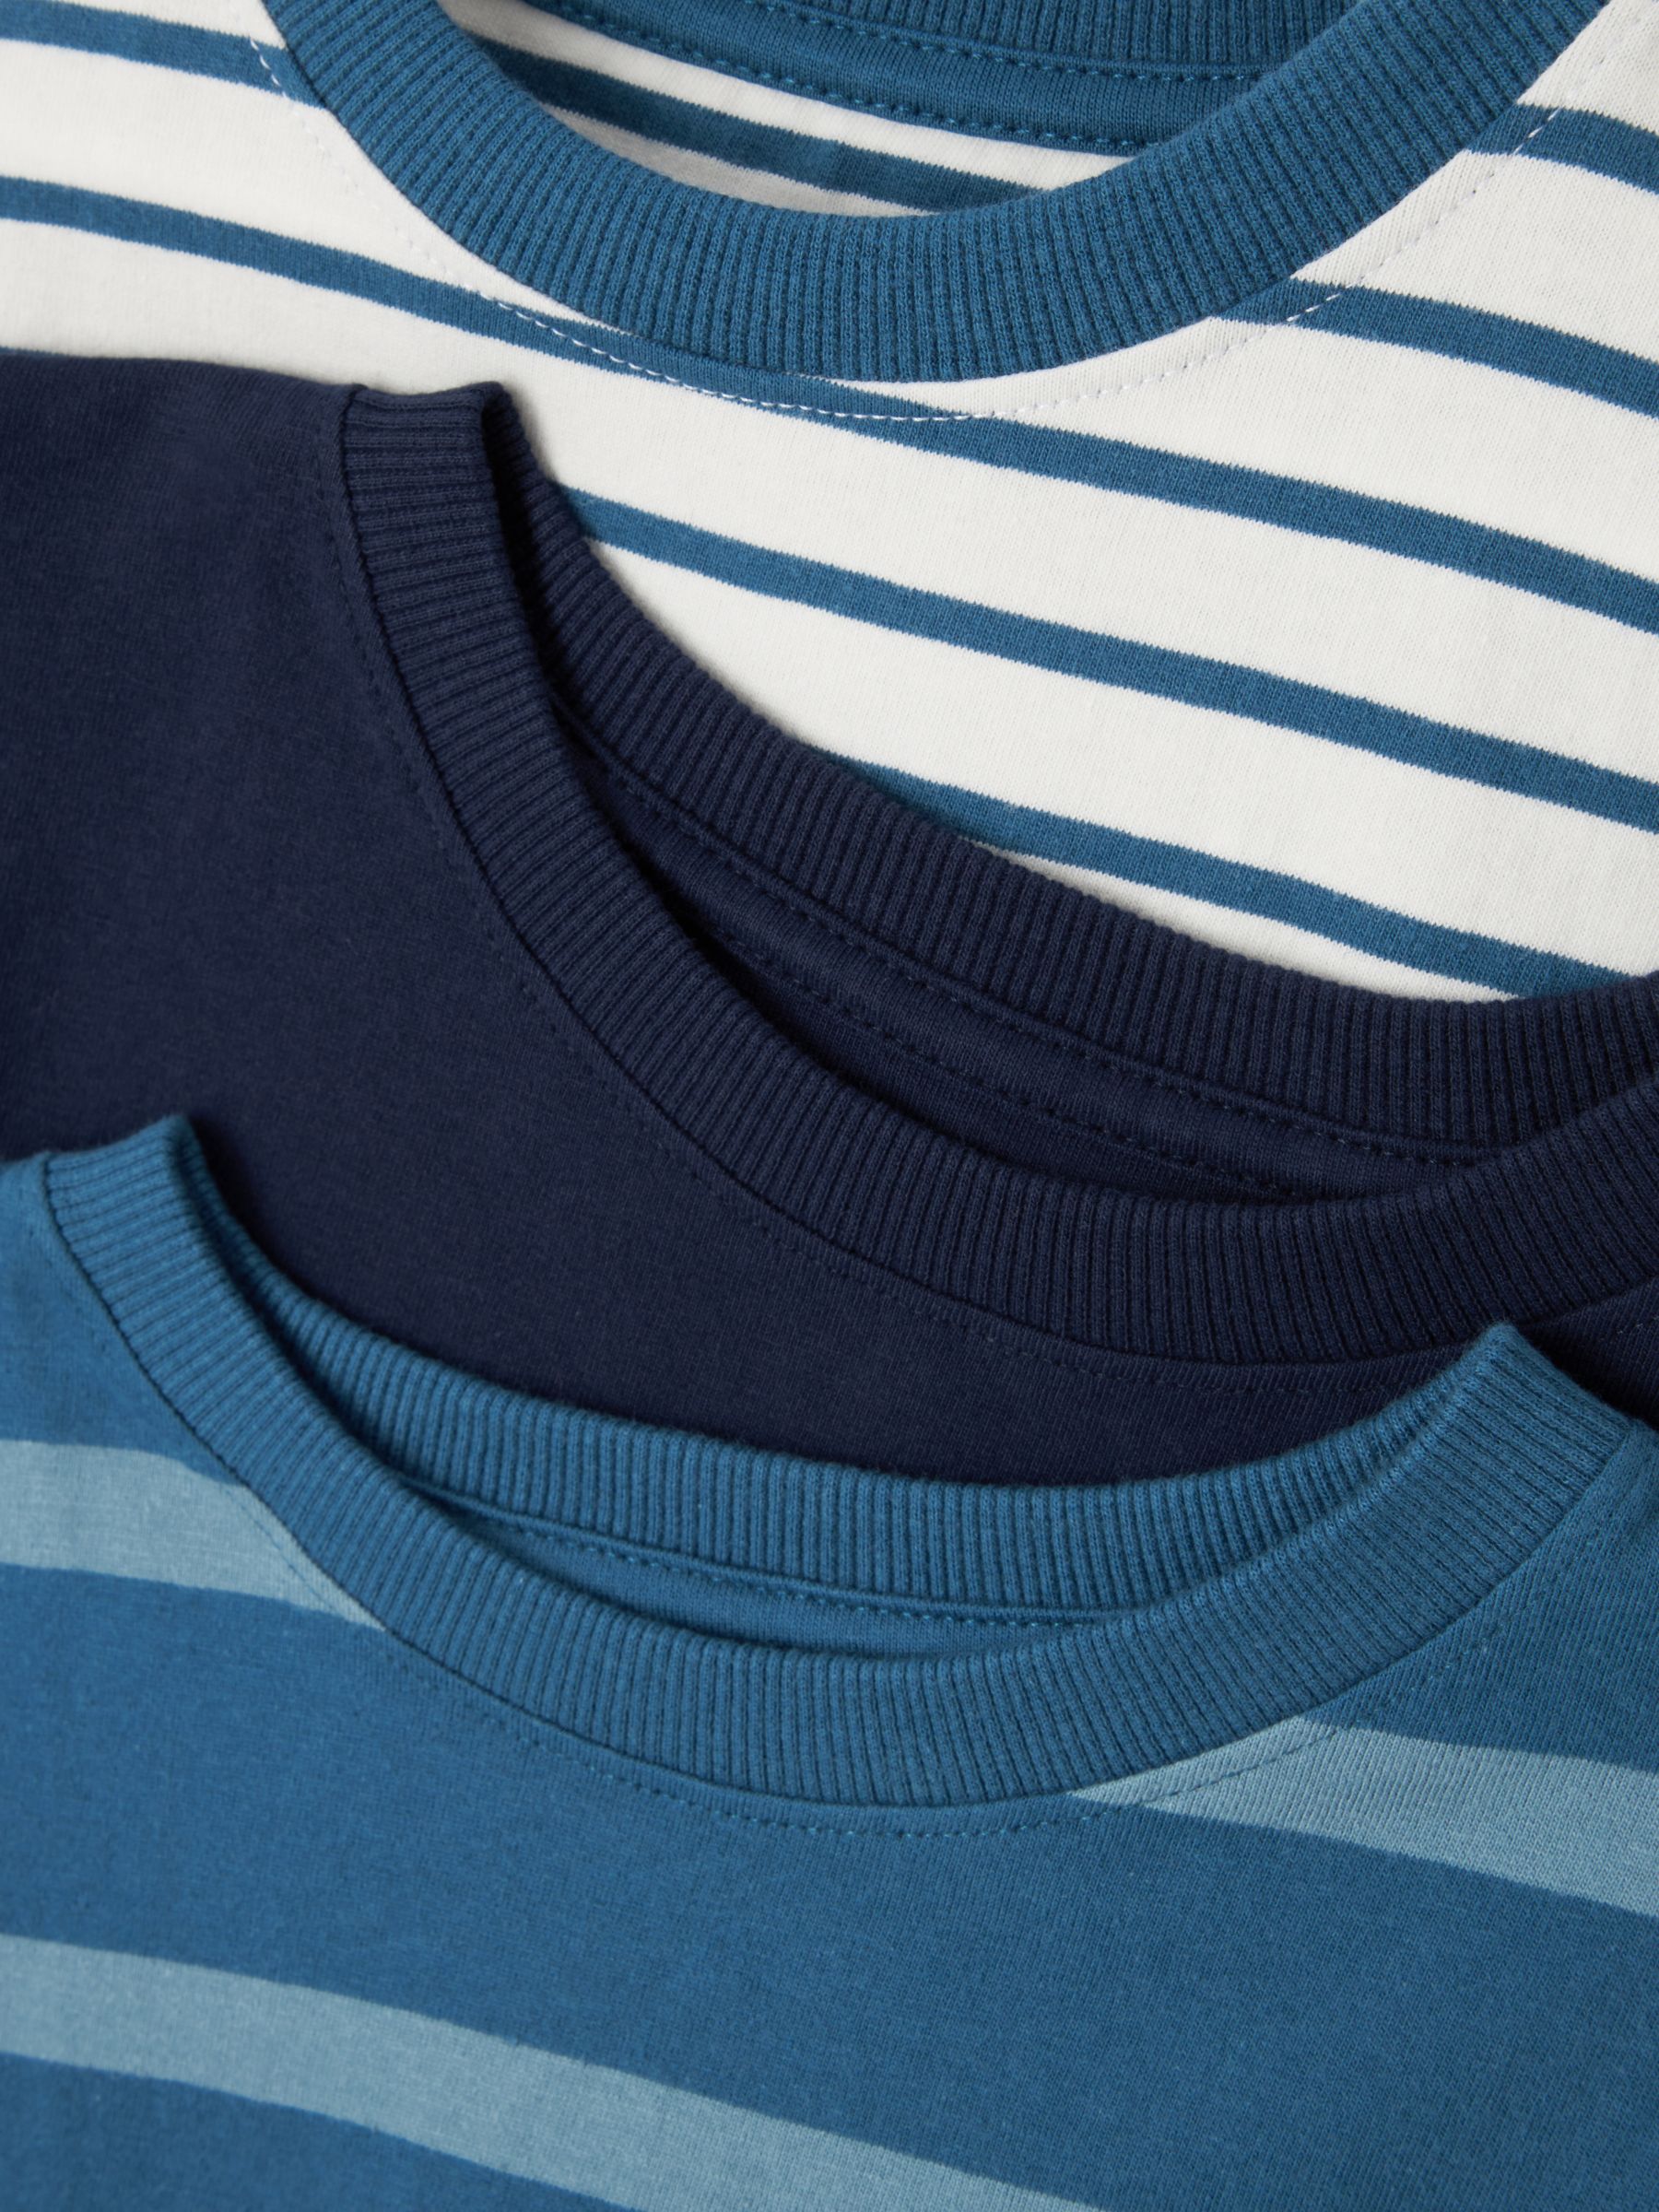 John Lewis Kids' Plain/Stripe T-Shirts, Pack of 3, Blue/Multi, 9 years